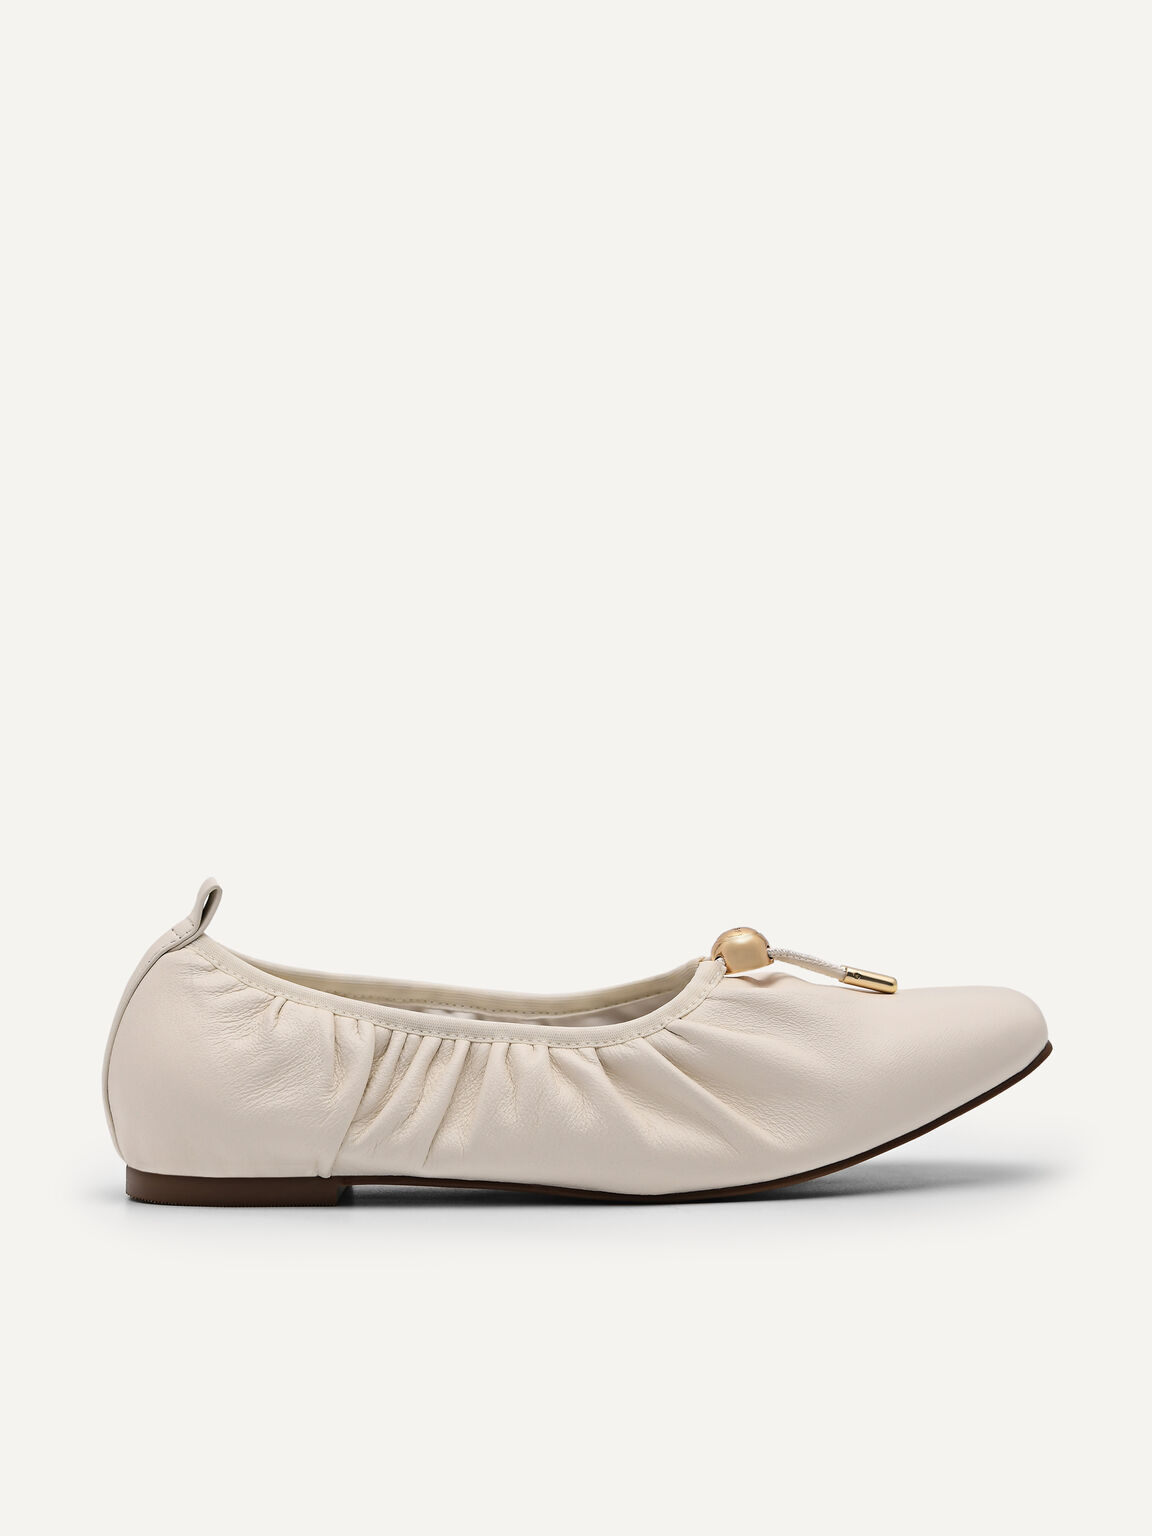 Monument芭蕾平底鞋, 粉笔白